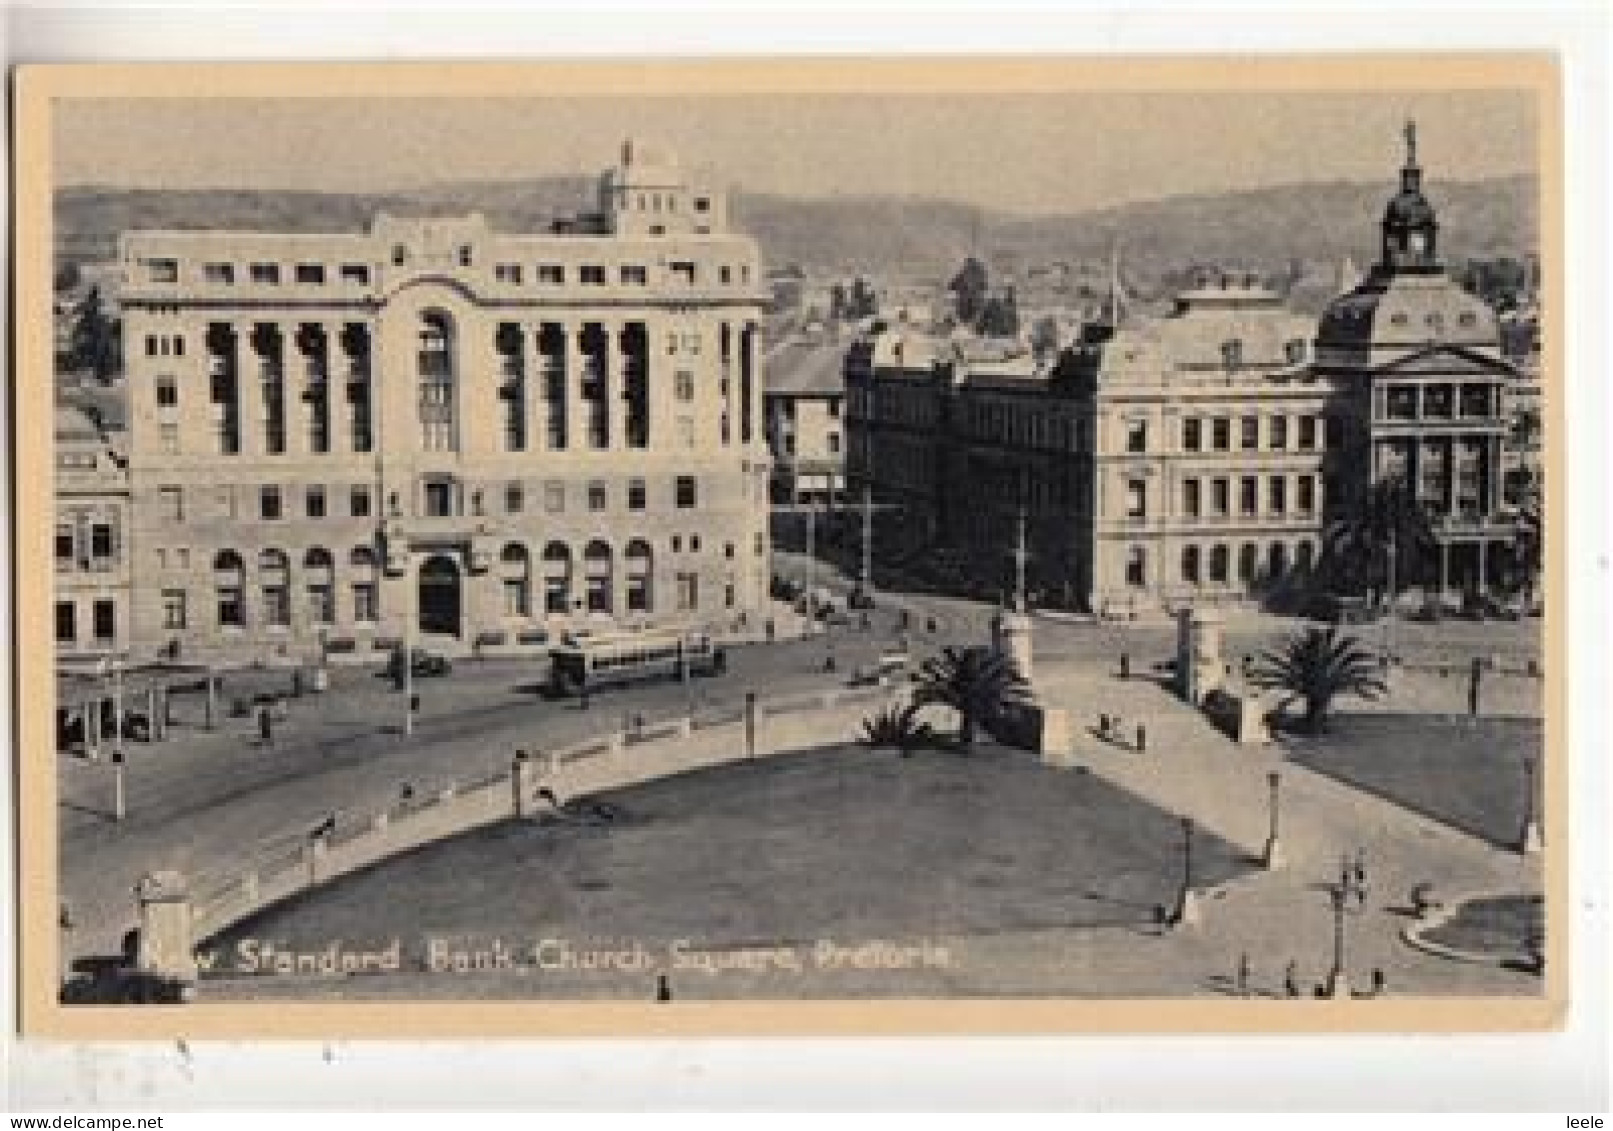 D22.  Vintage Postcard. New Standard Bank, Church Square, Pretoria. South Africa. - Zuid-Afrika